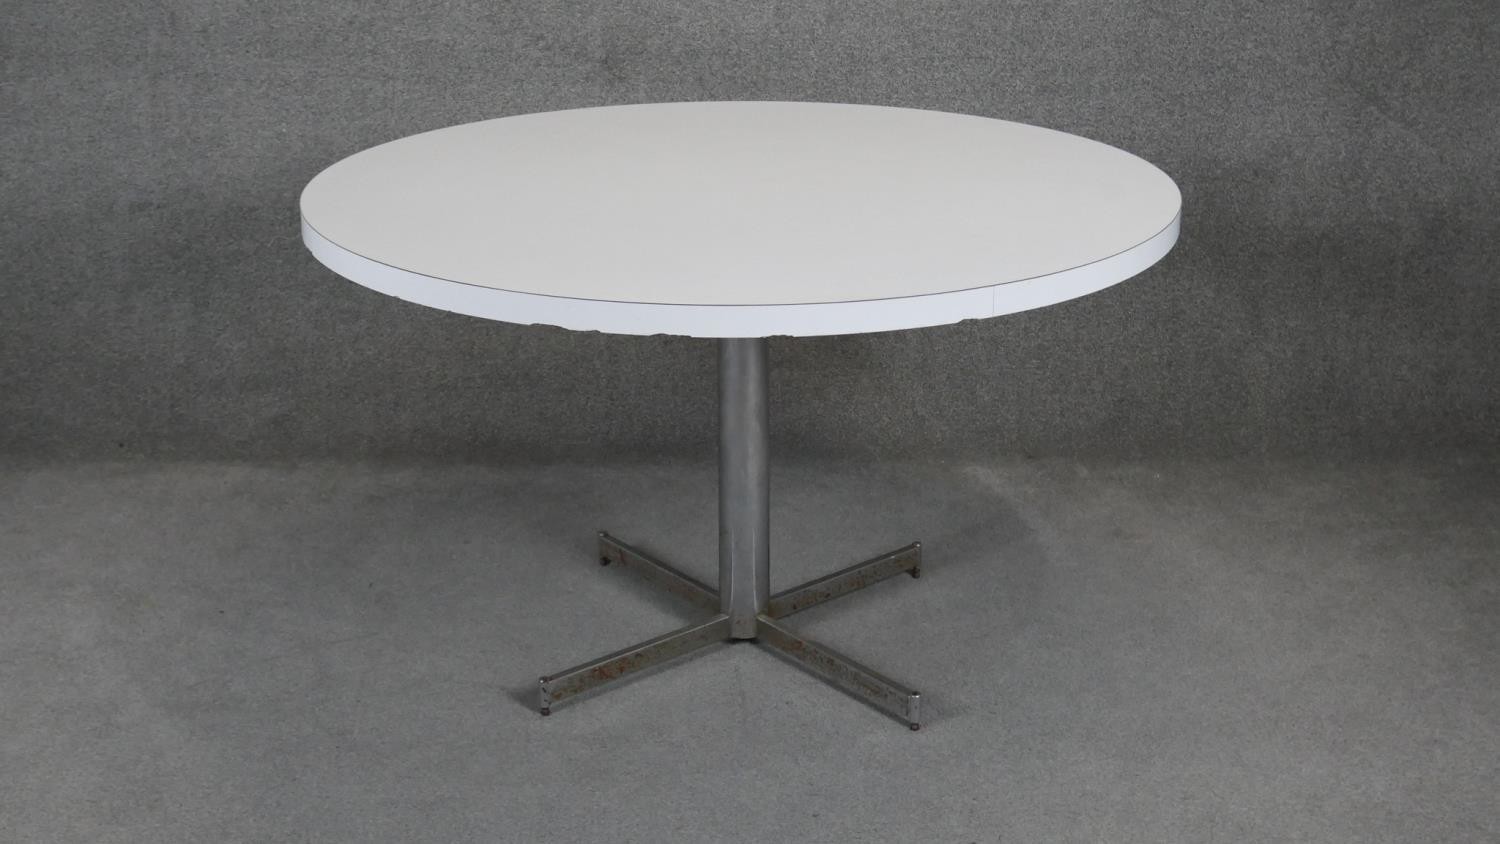 A vintage circular dining table on chrome base. D121 H71cm